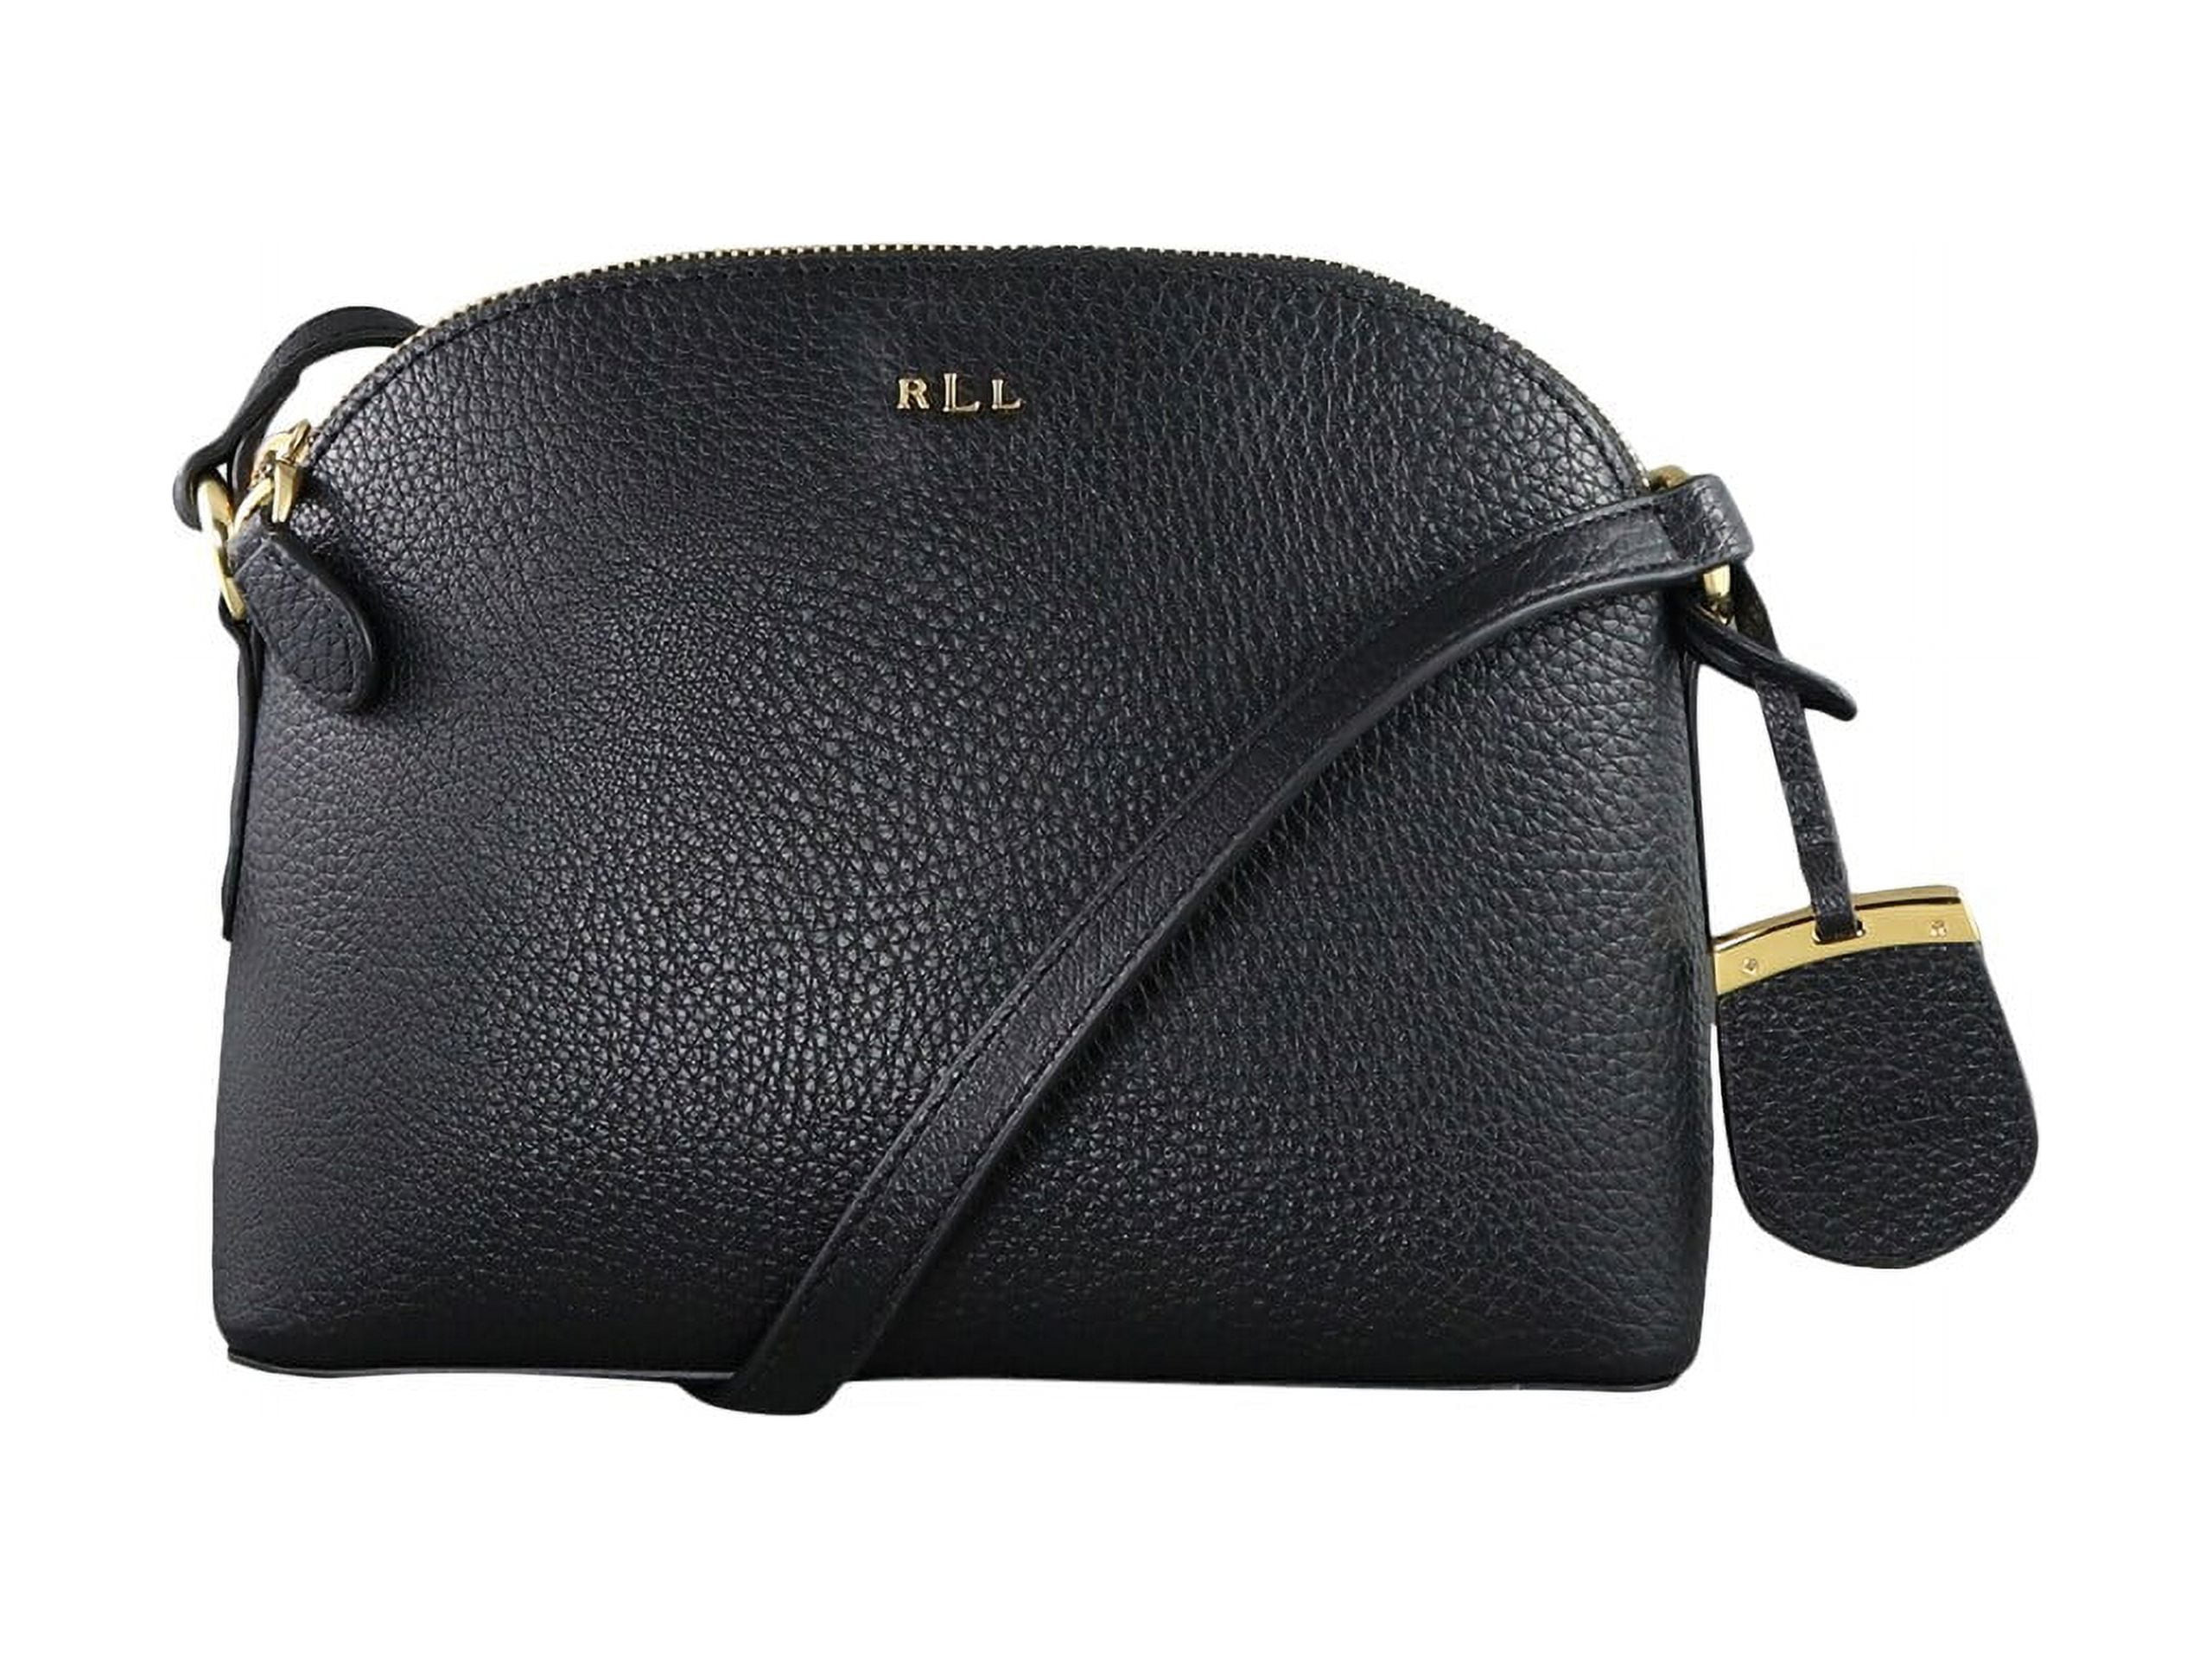 Ralph Lauren Bags & Handbags sale - discounted price | FASHIOLA INDIA